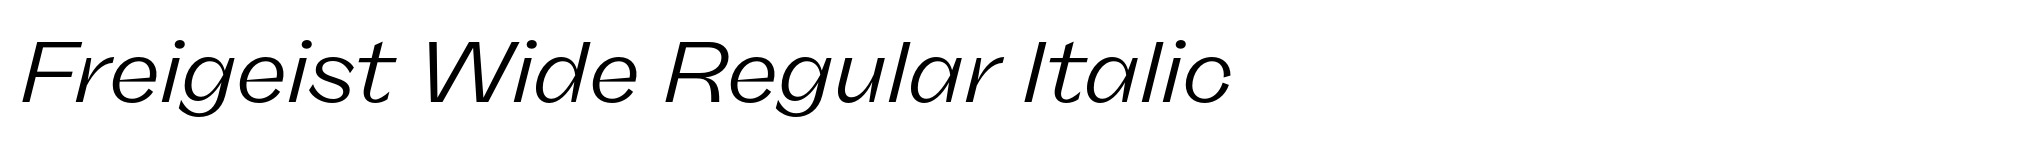 Freigeist Wide Regular Italic image